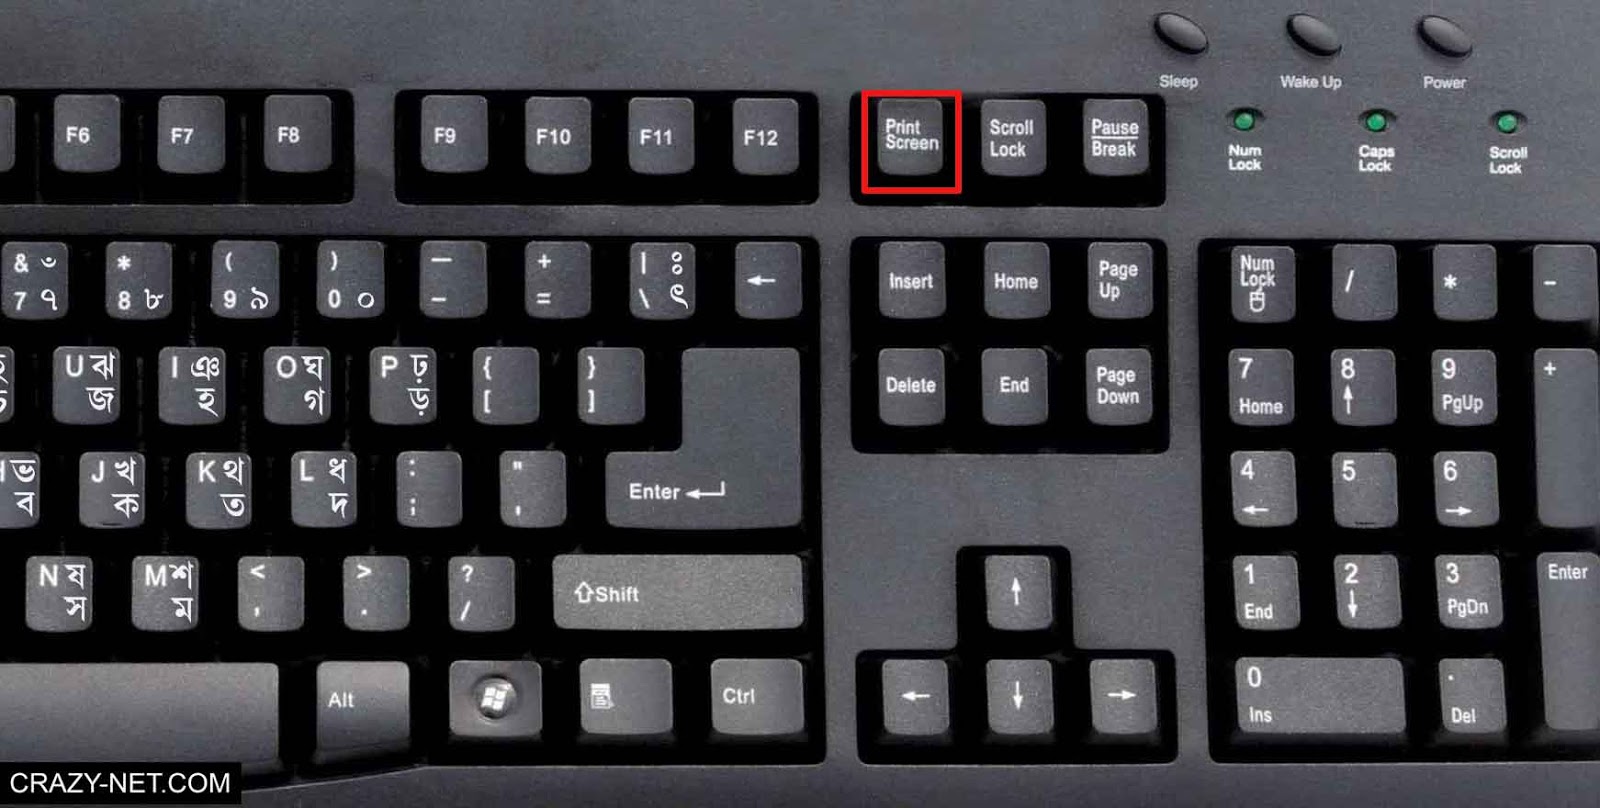 Клав куда. Win+Pause Break. Print Screen на клавиатуре. Кнопка use. Кнопка use на клавиатуре.